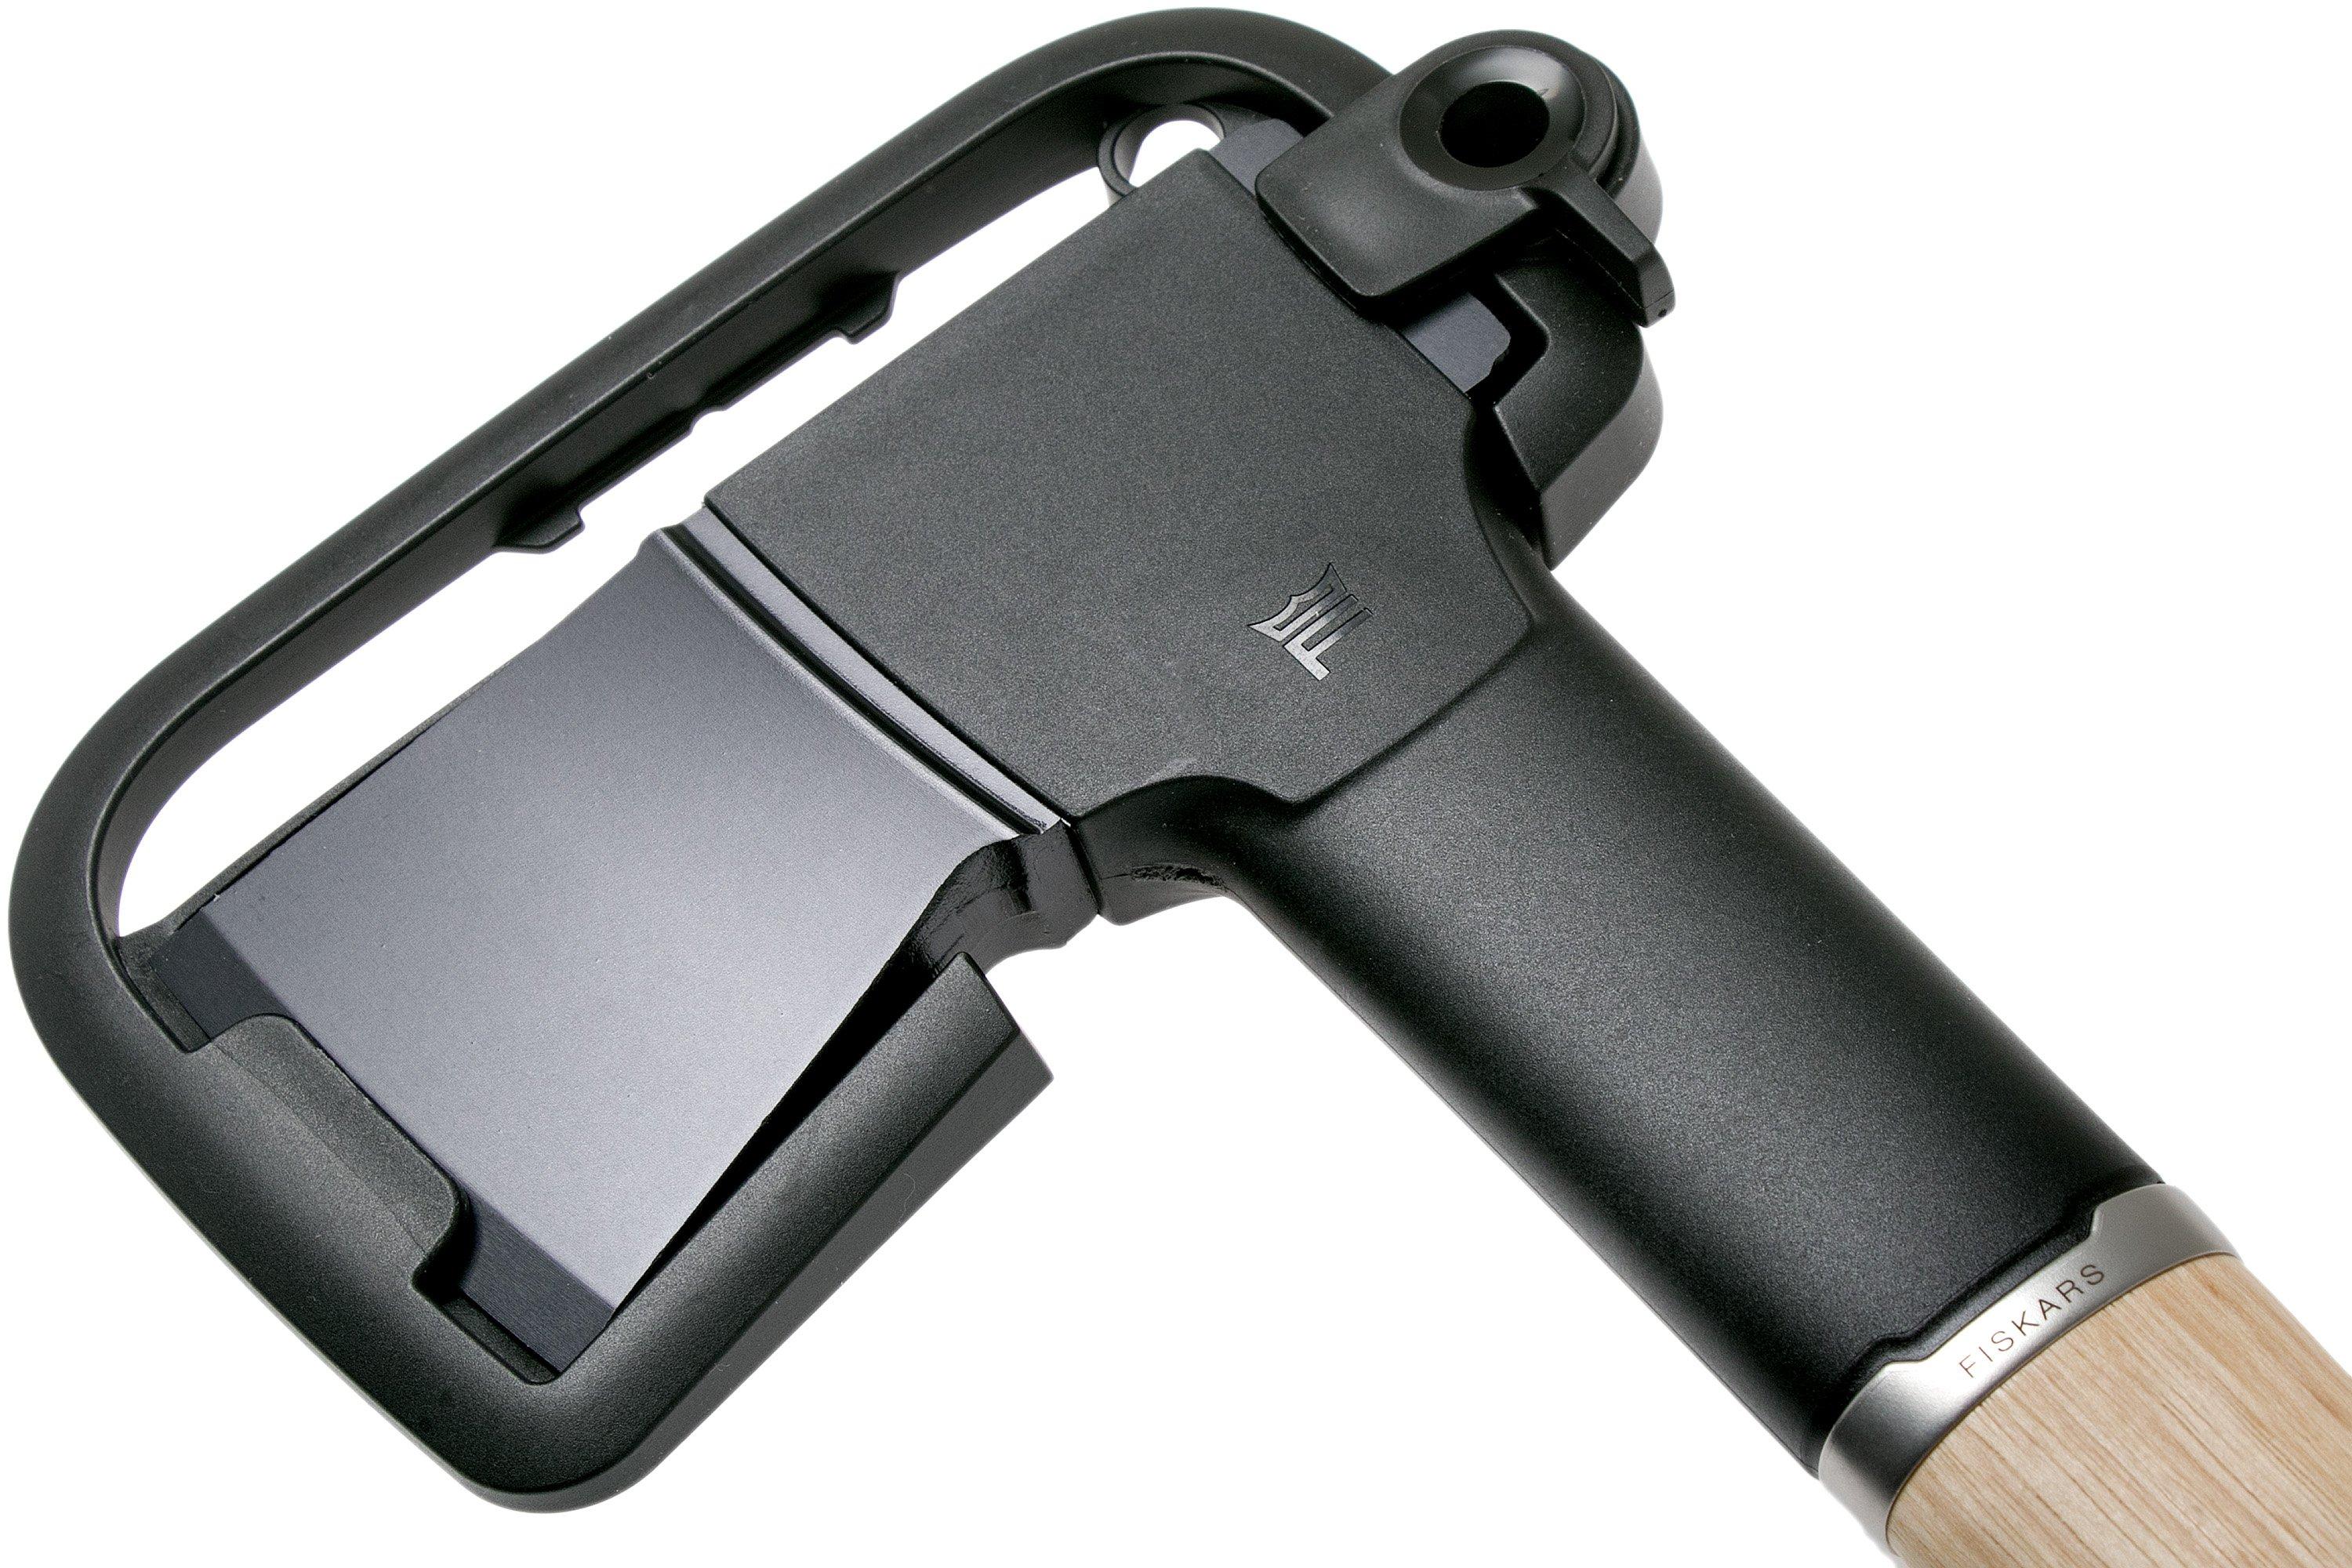 Fiskars Norden N10 hand axe + sharpener | Advantageously shopping at